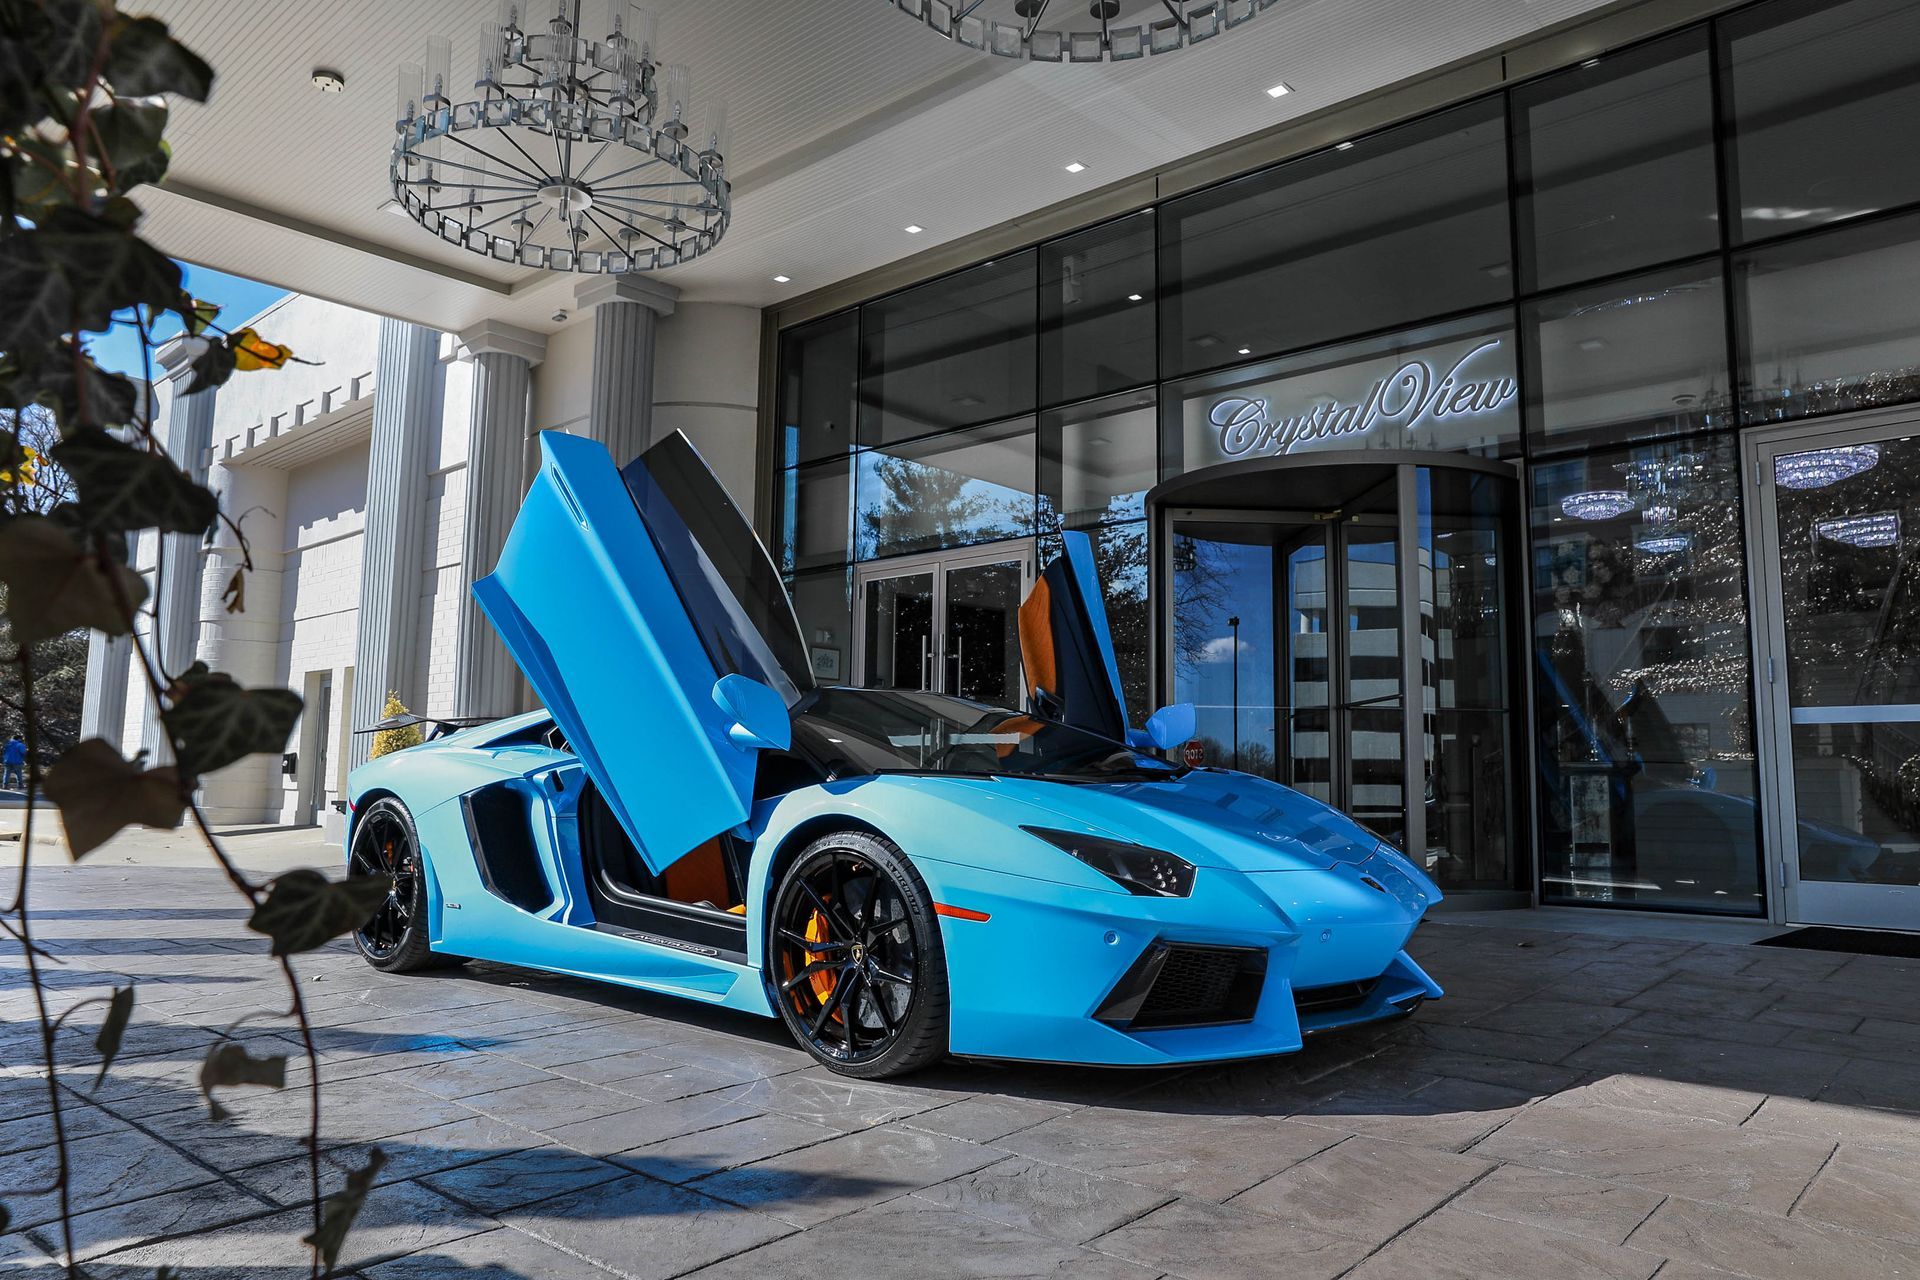 luxury car Lamborghini Aventador available for photo opportunities